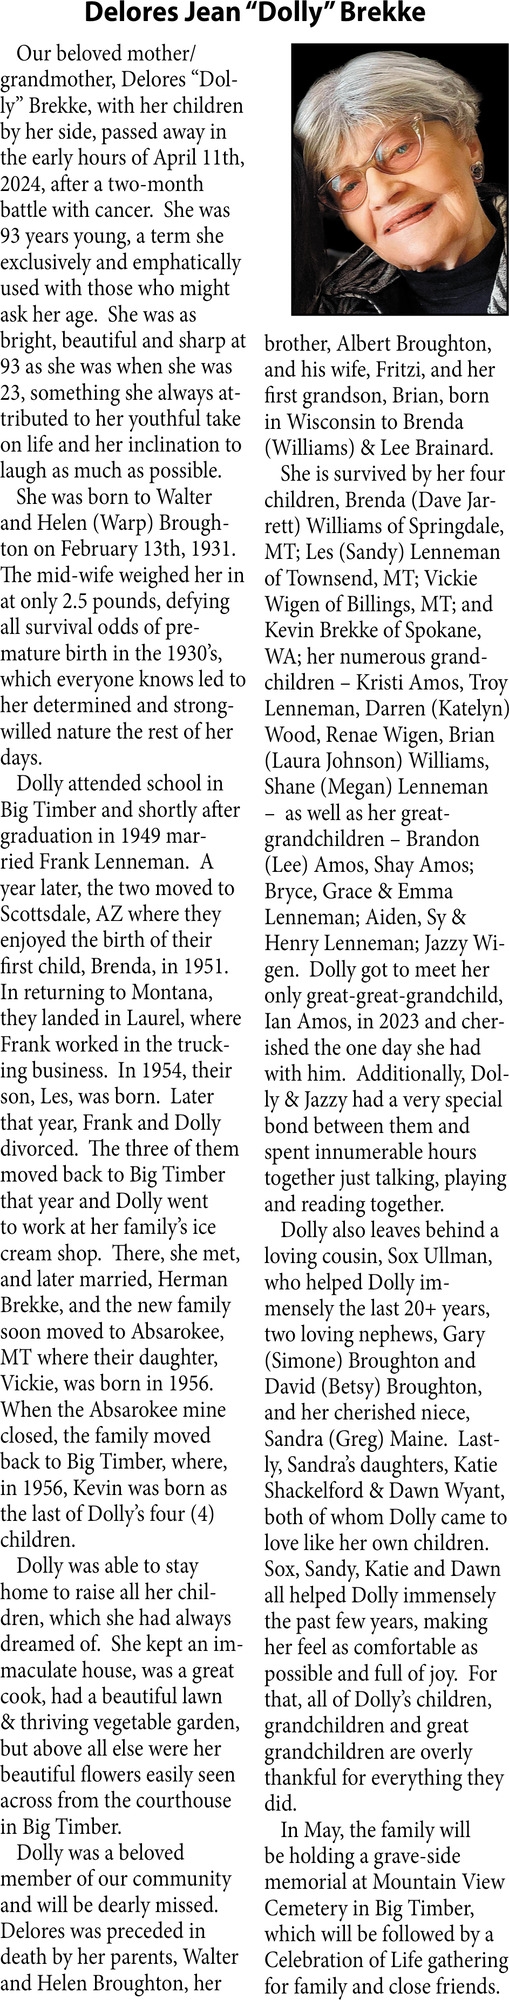 Delores Jean "Dolly" Brekke, Obituaries, Glendive, MT